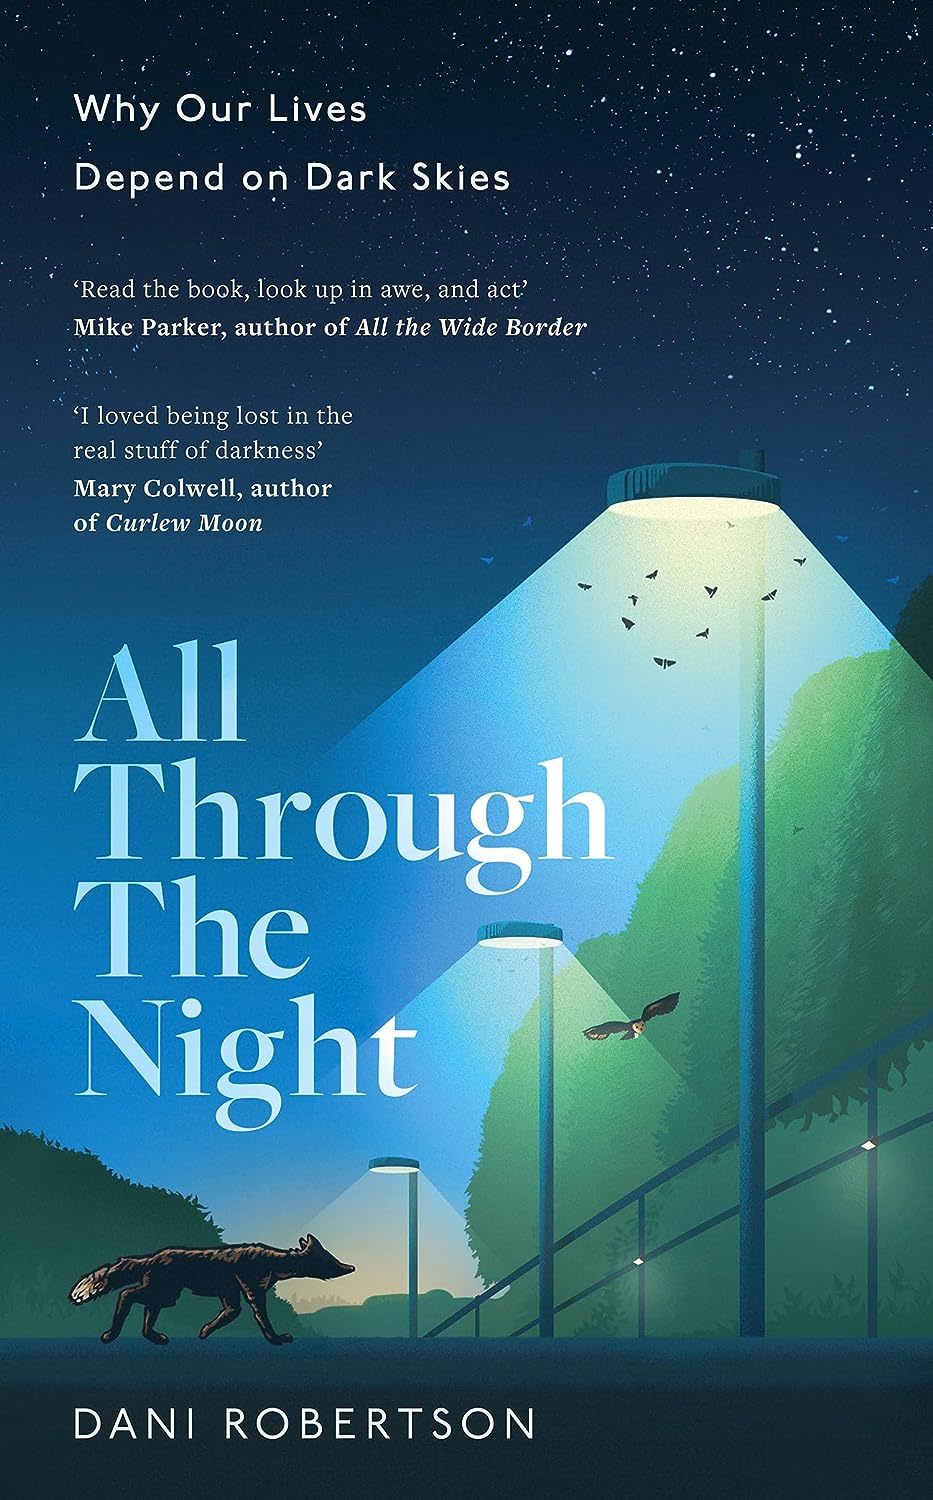 All Through the Night by Dani Robertson